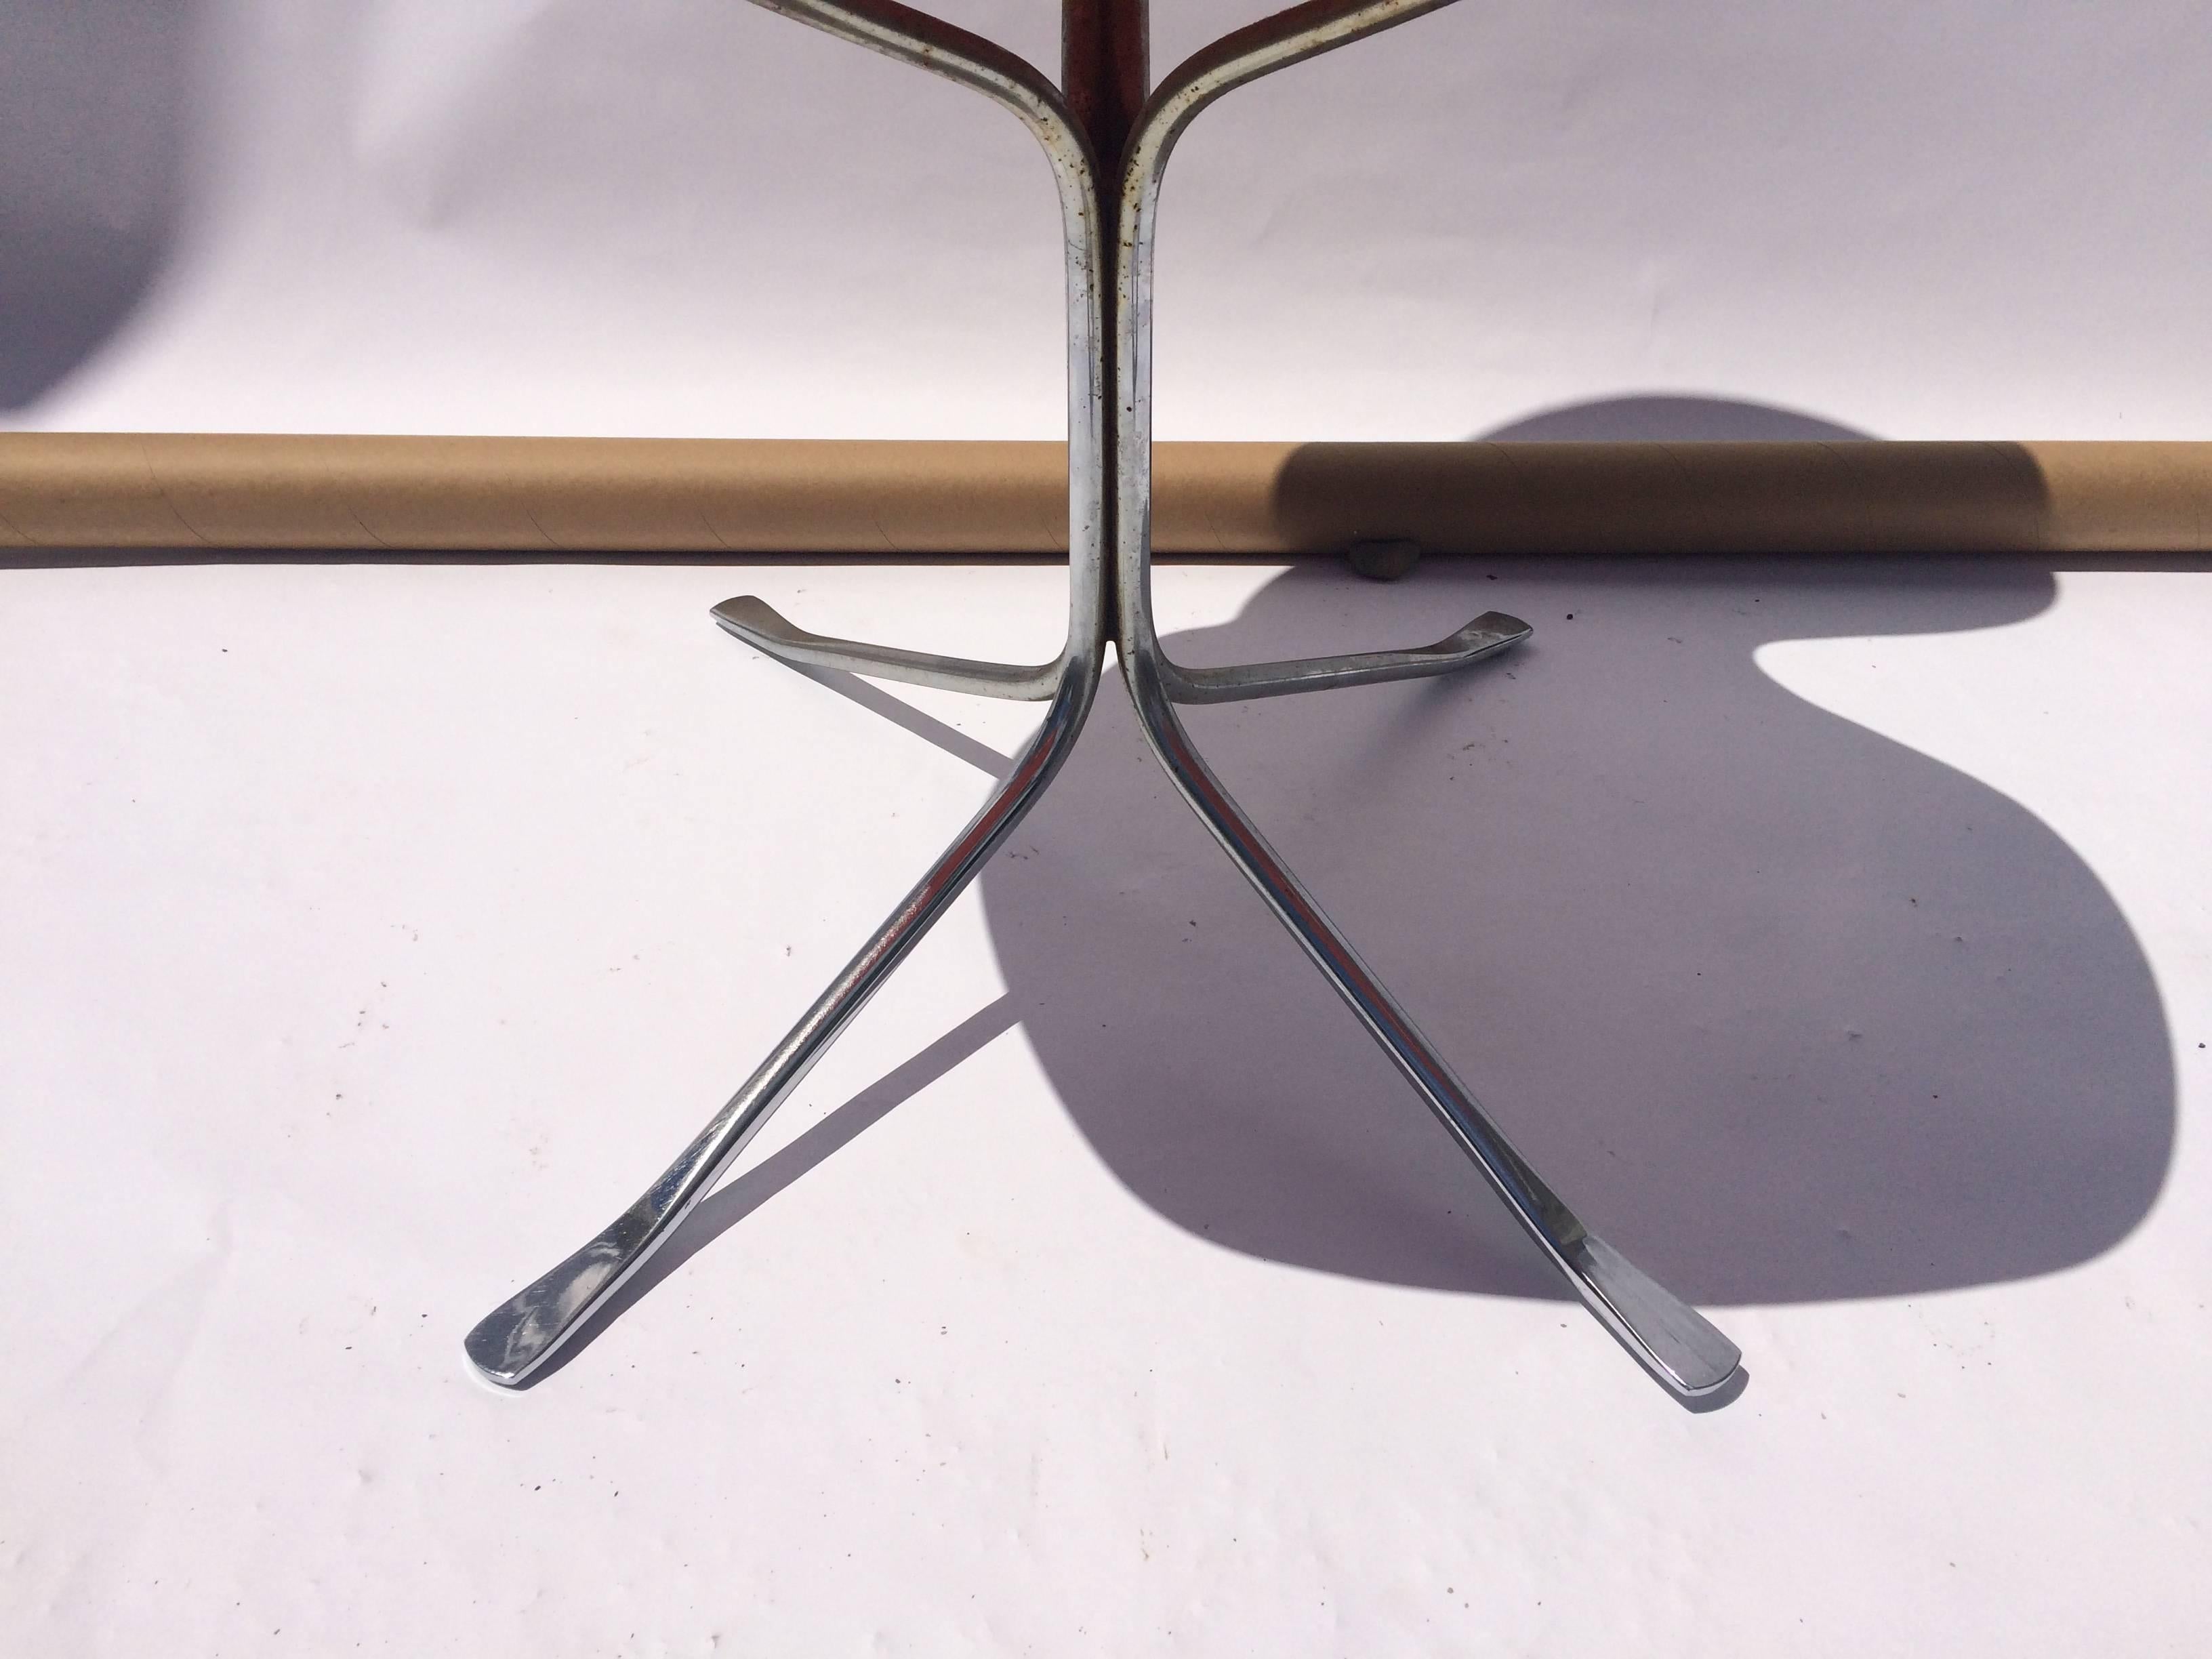 Fiberglass and chrome ion chair by Gideon Kramer.